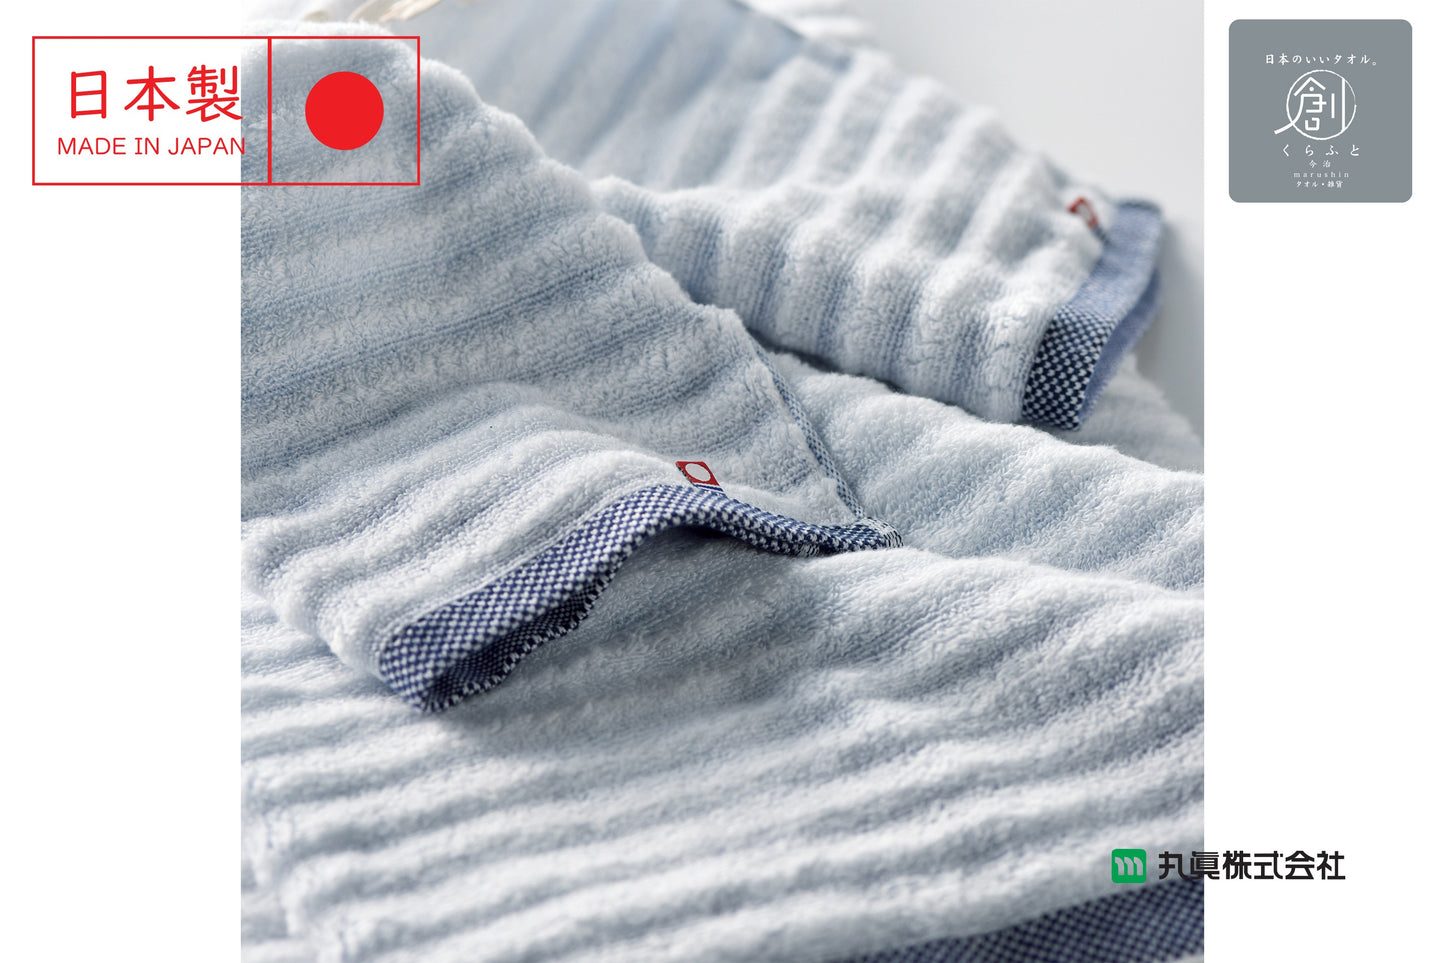 Imabari "Craft" Star plus Blue Zero Twist Towel